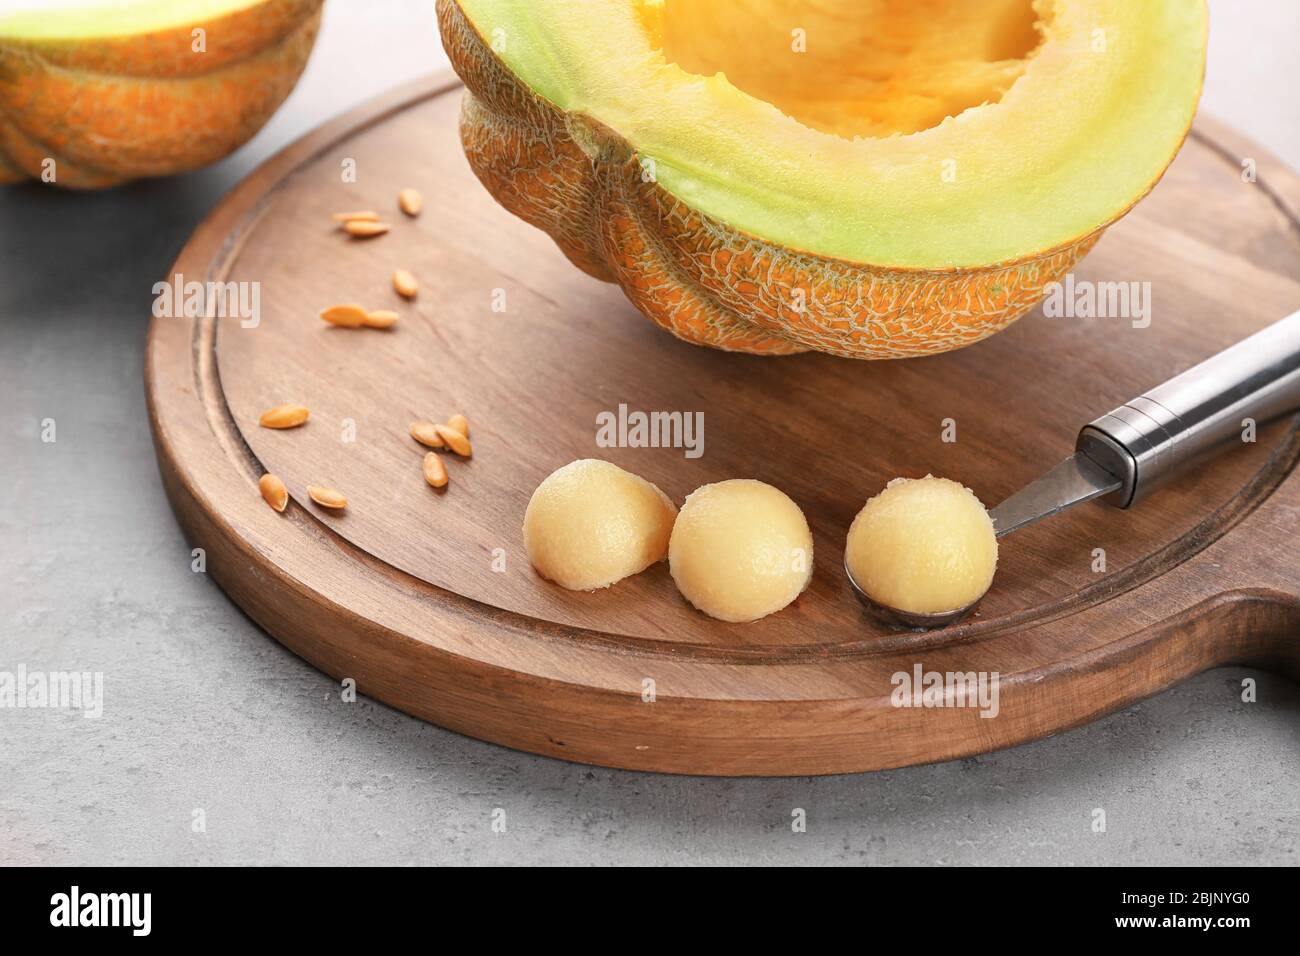 https://c8.alamy.com/comp/2BJNYG0/board-with-melon-and-tasty-balls-on-table-2BJNYG0.jpg